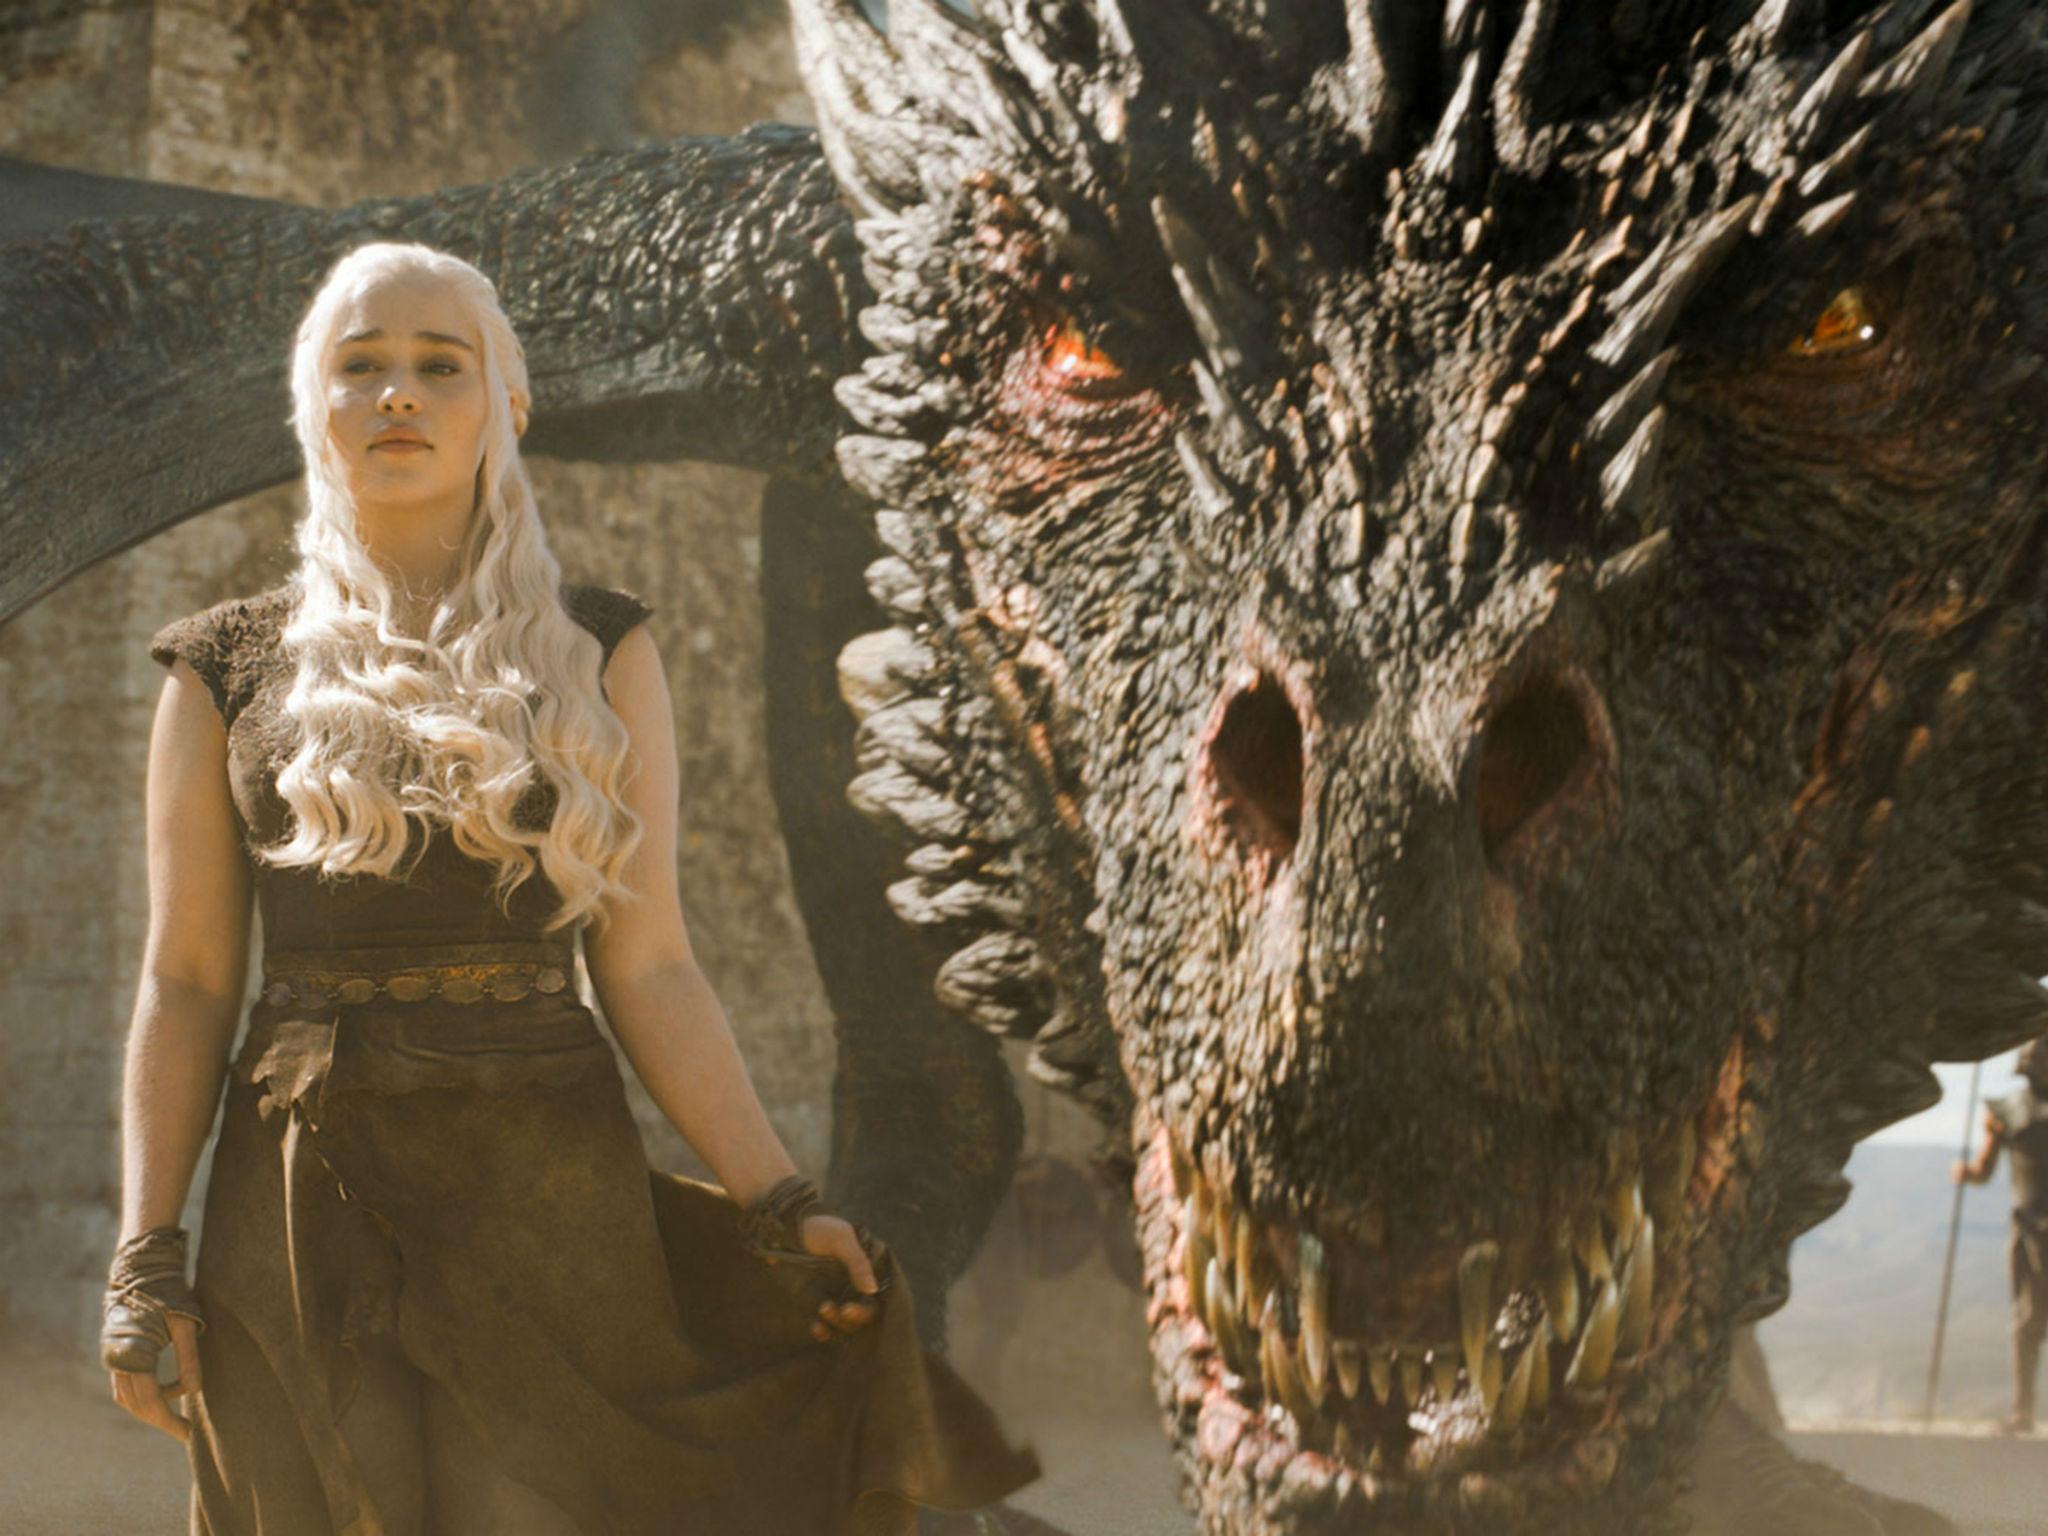 The mother of dragons. Дейенерис Таргариен с драконами. Дайненис Таргариен и дракон.